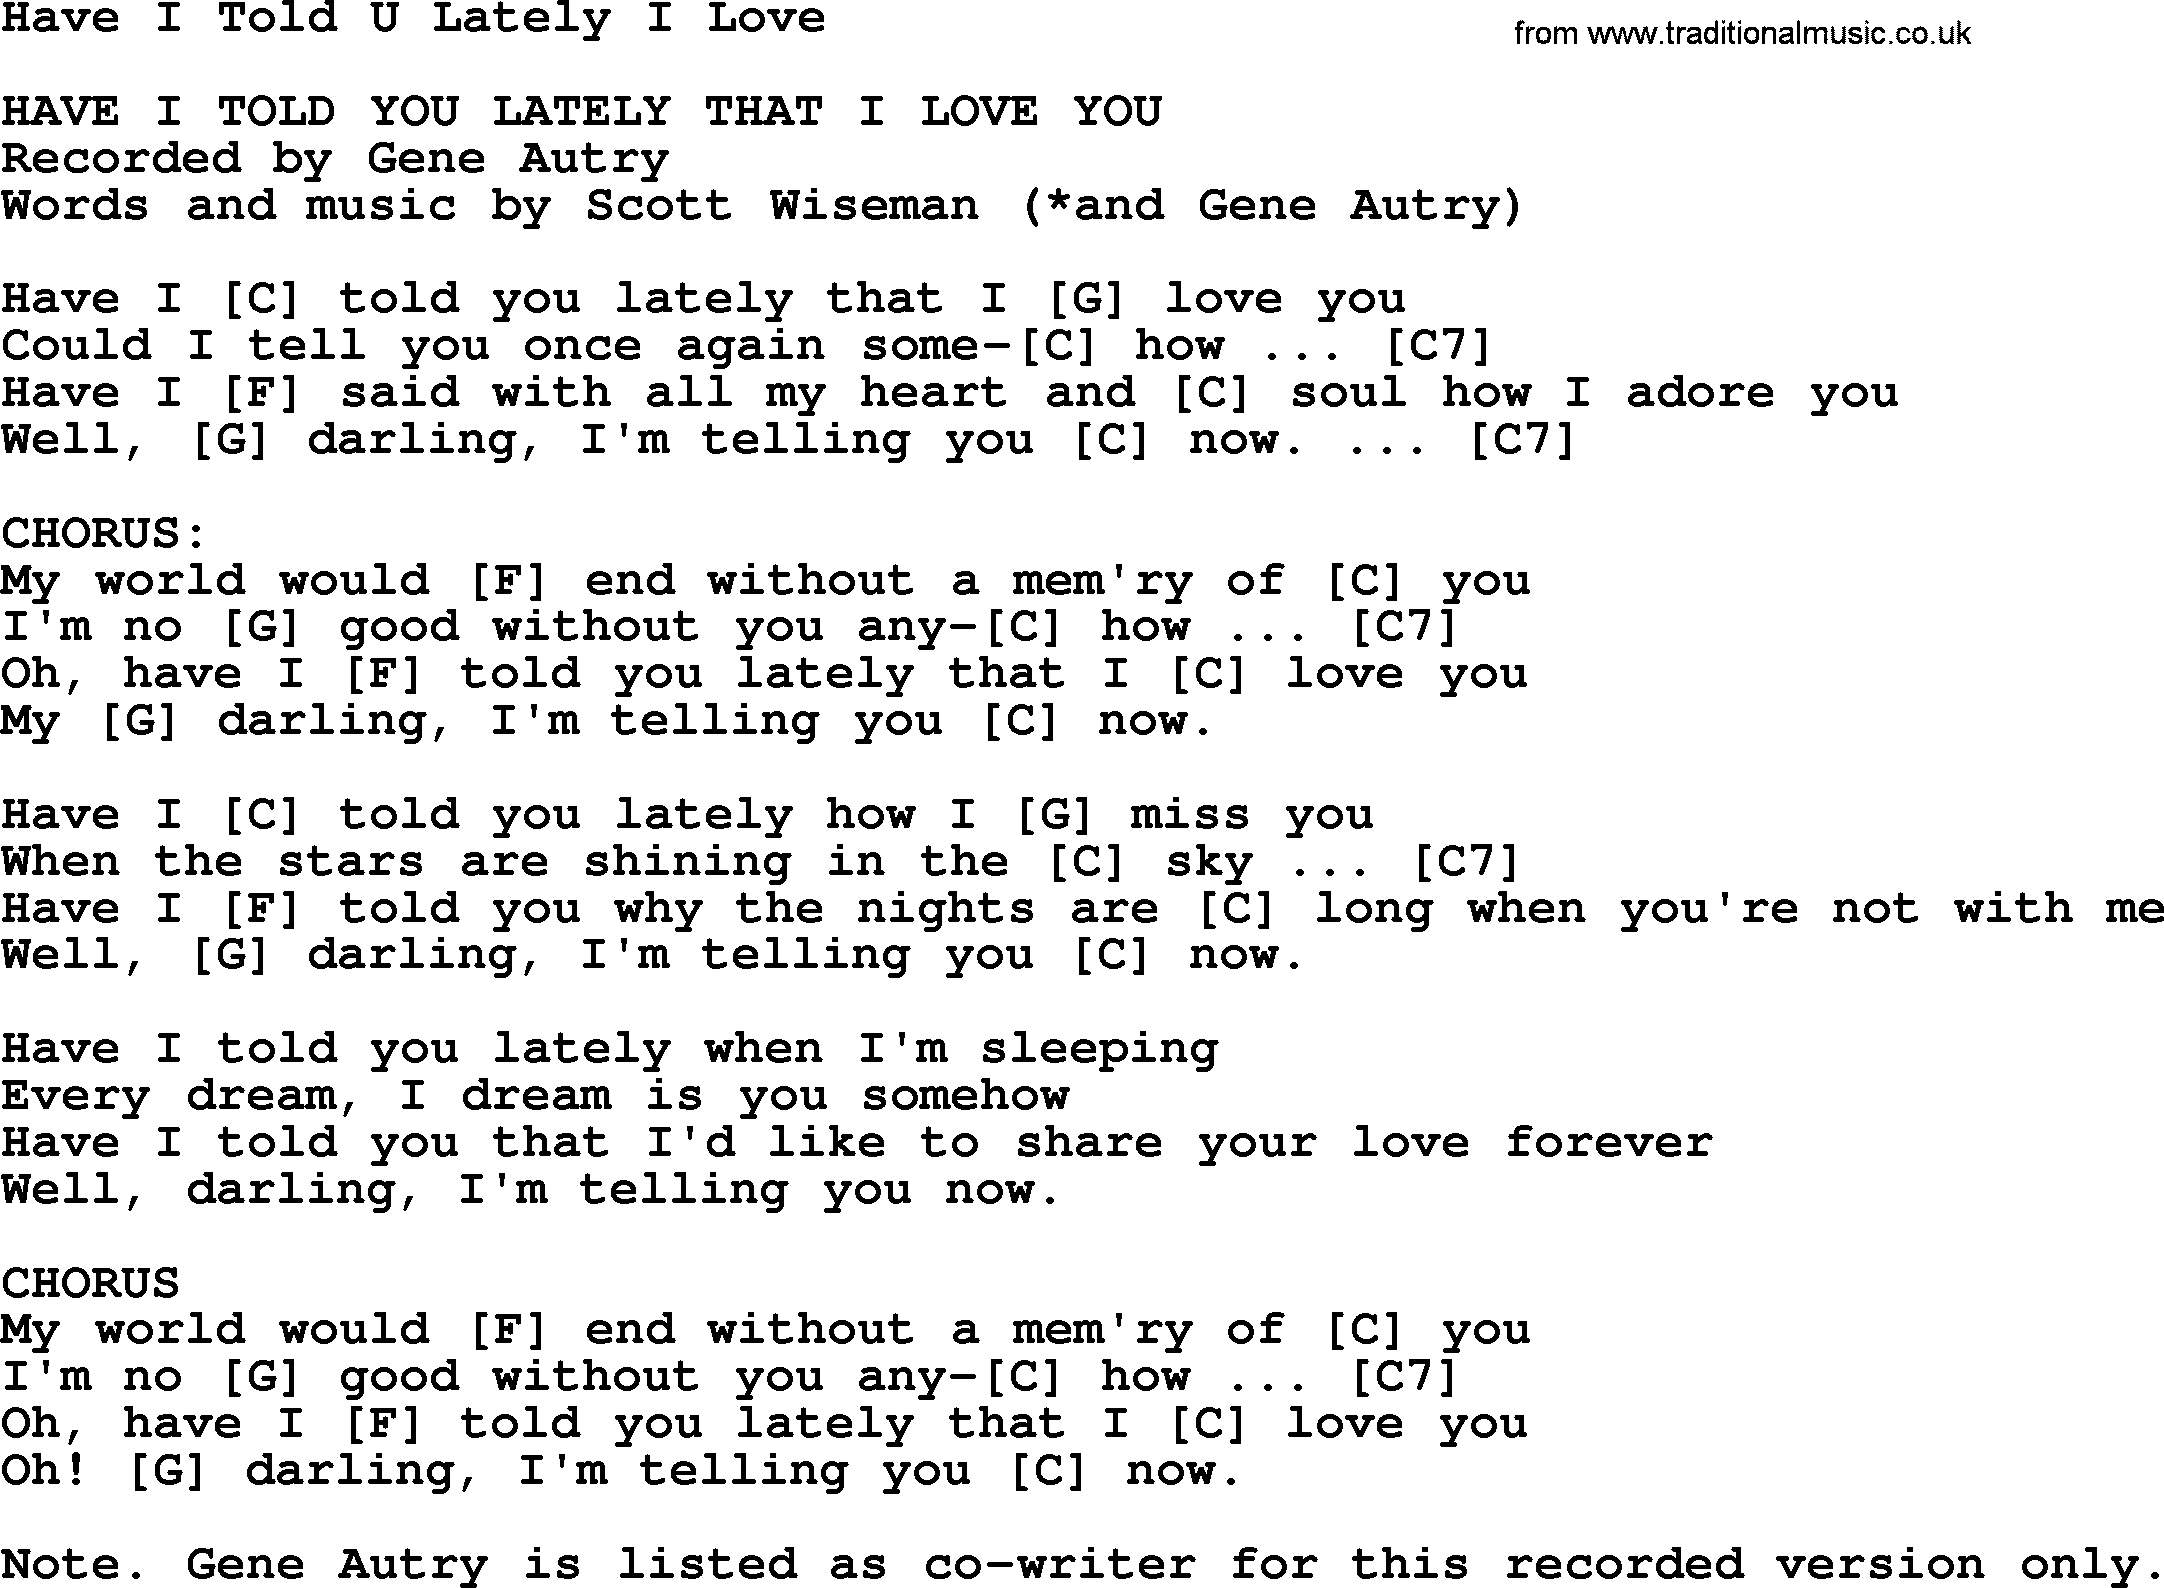 Bluegrass song: Have I Told U Lately I Love, lyrics and chords